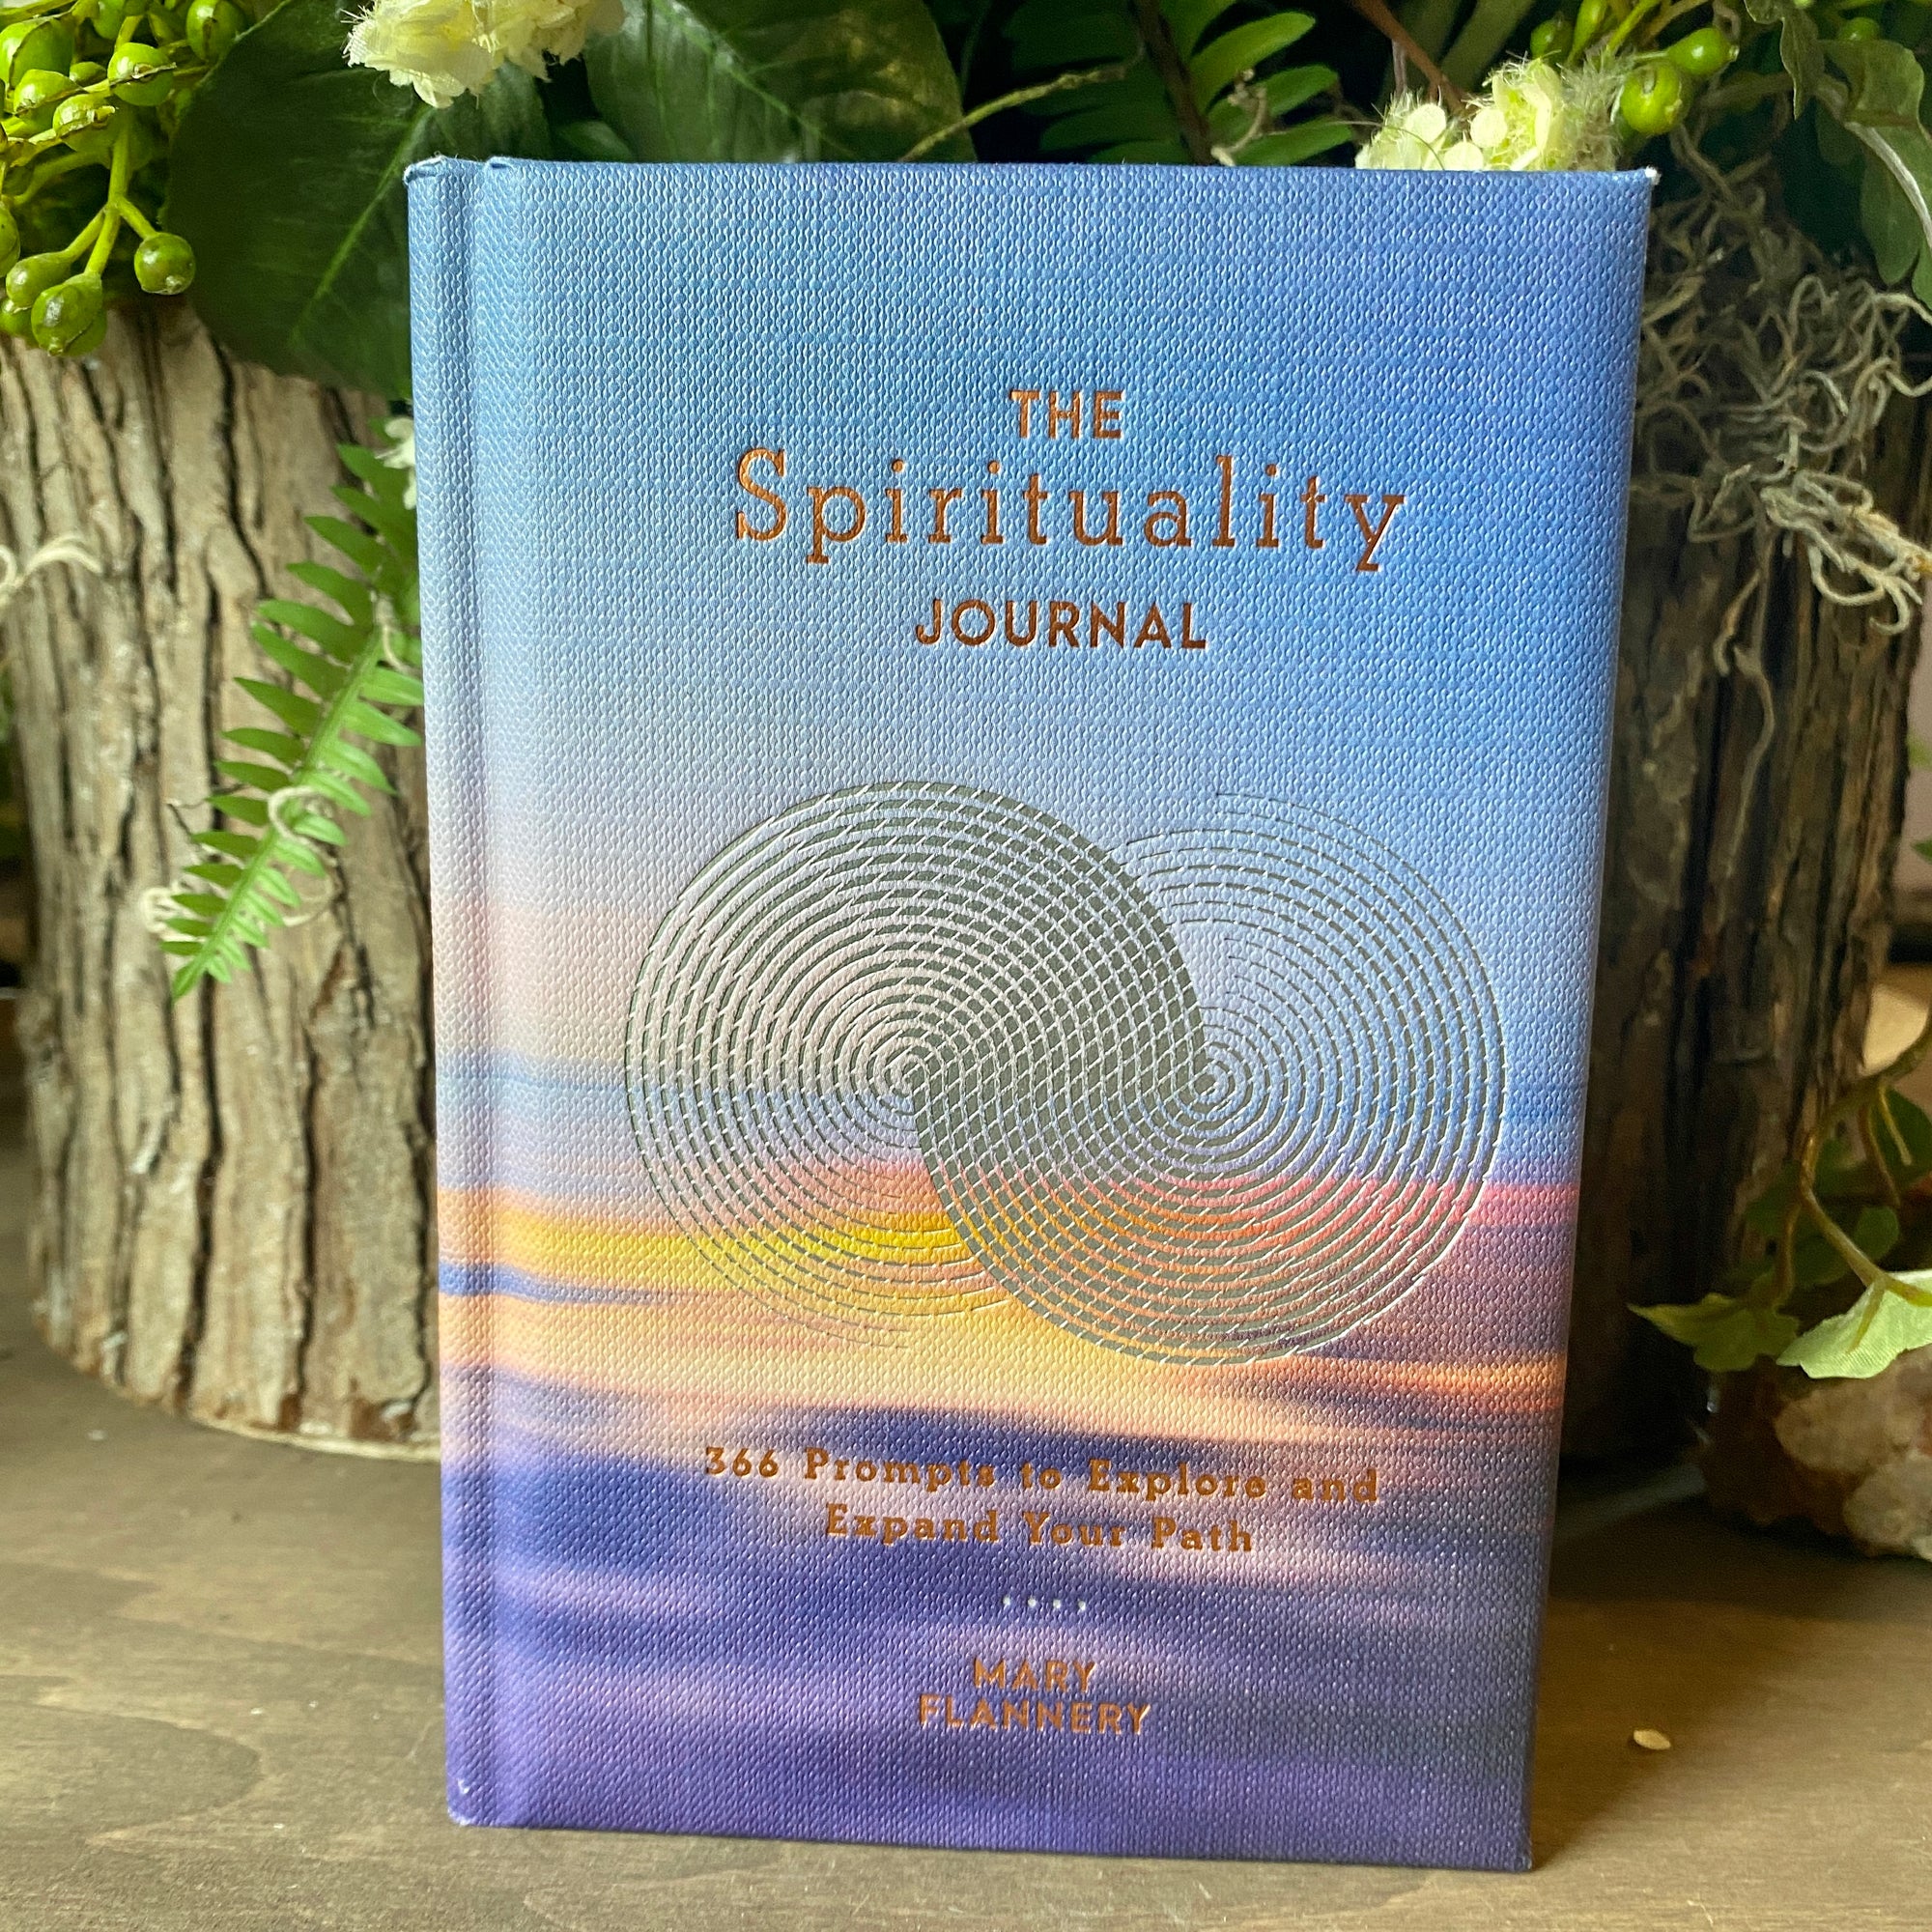 The Spirituality Journal